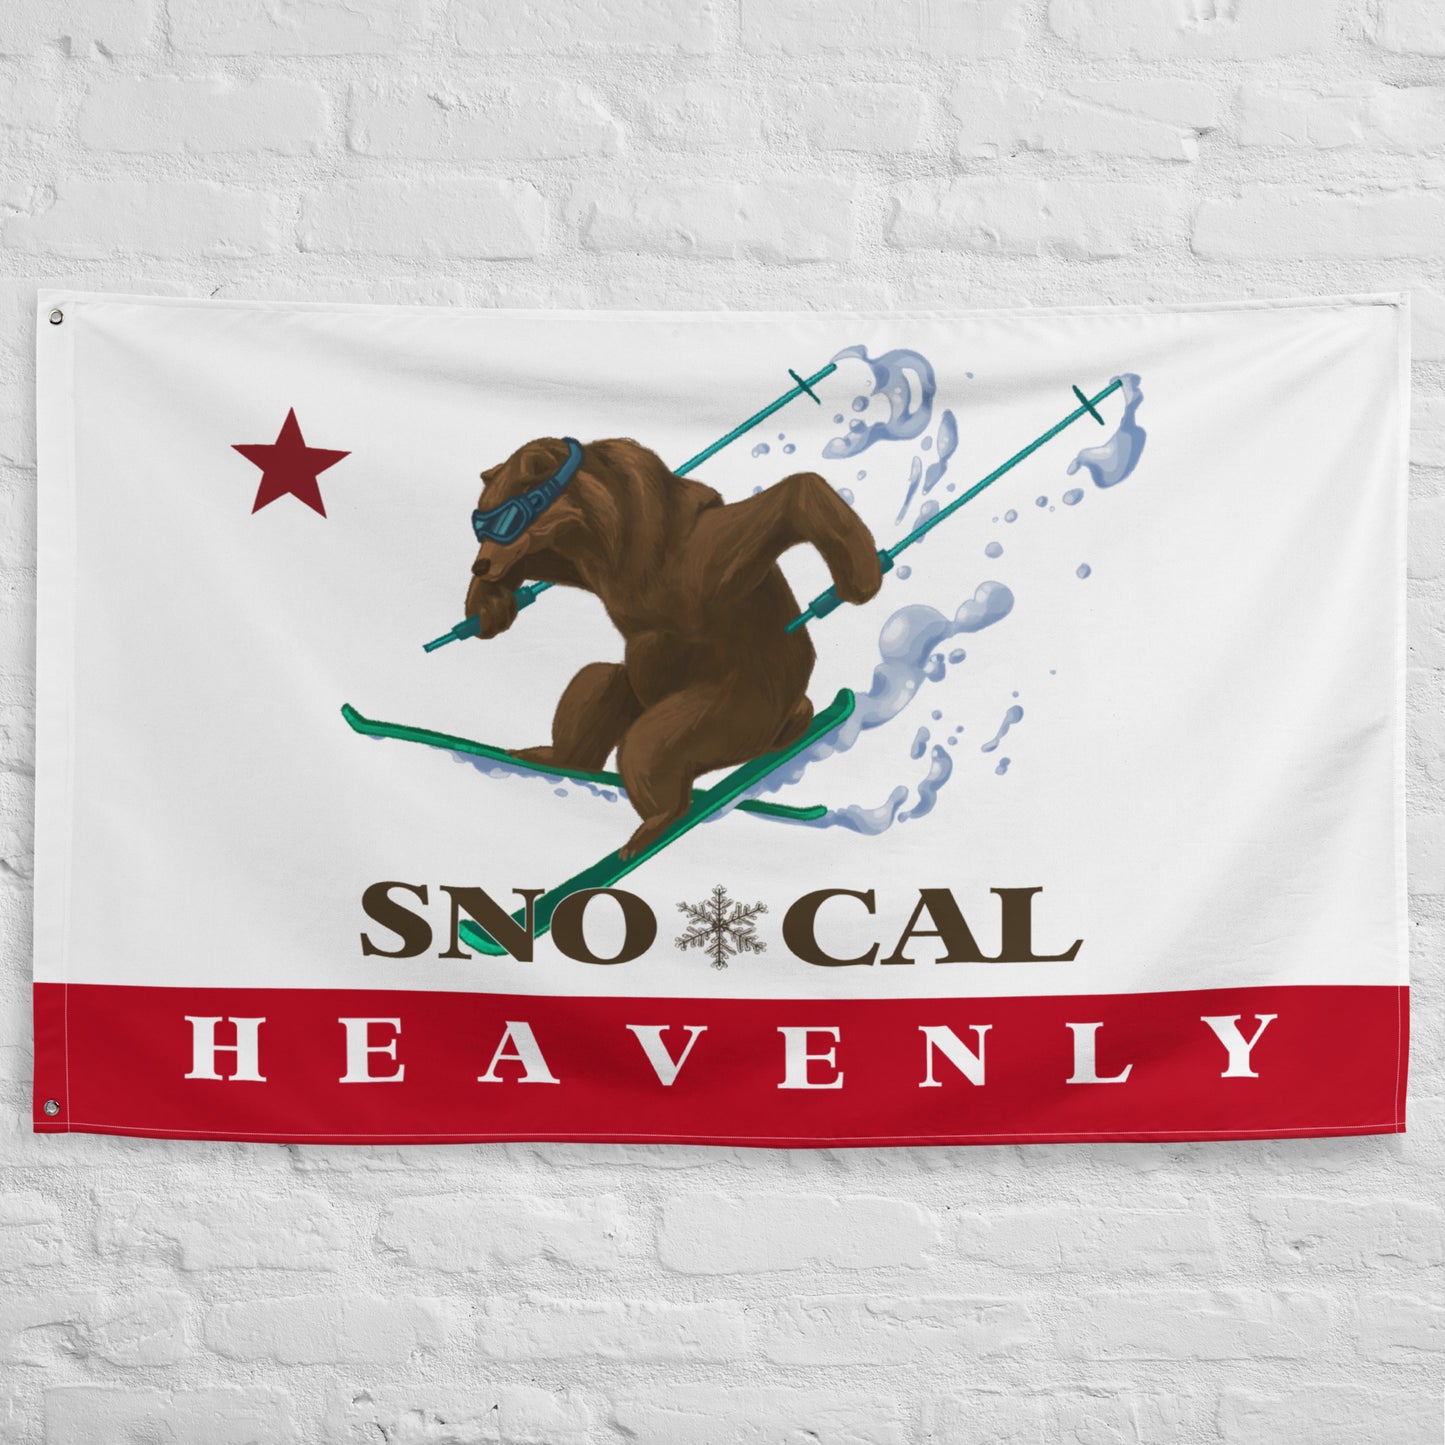 Heavenly Sno*Cal Ski Flag